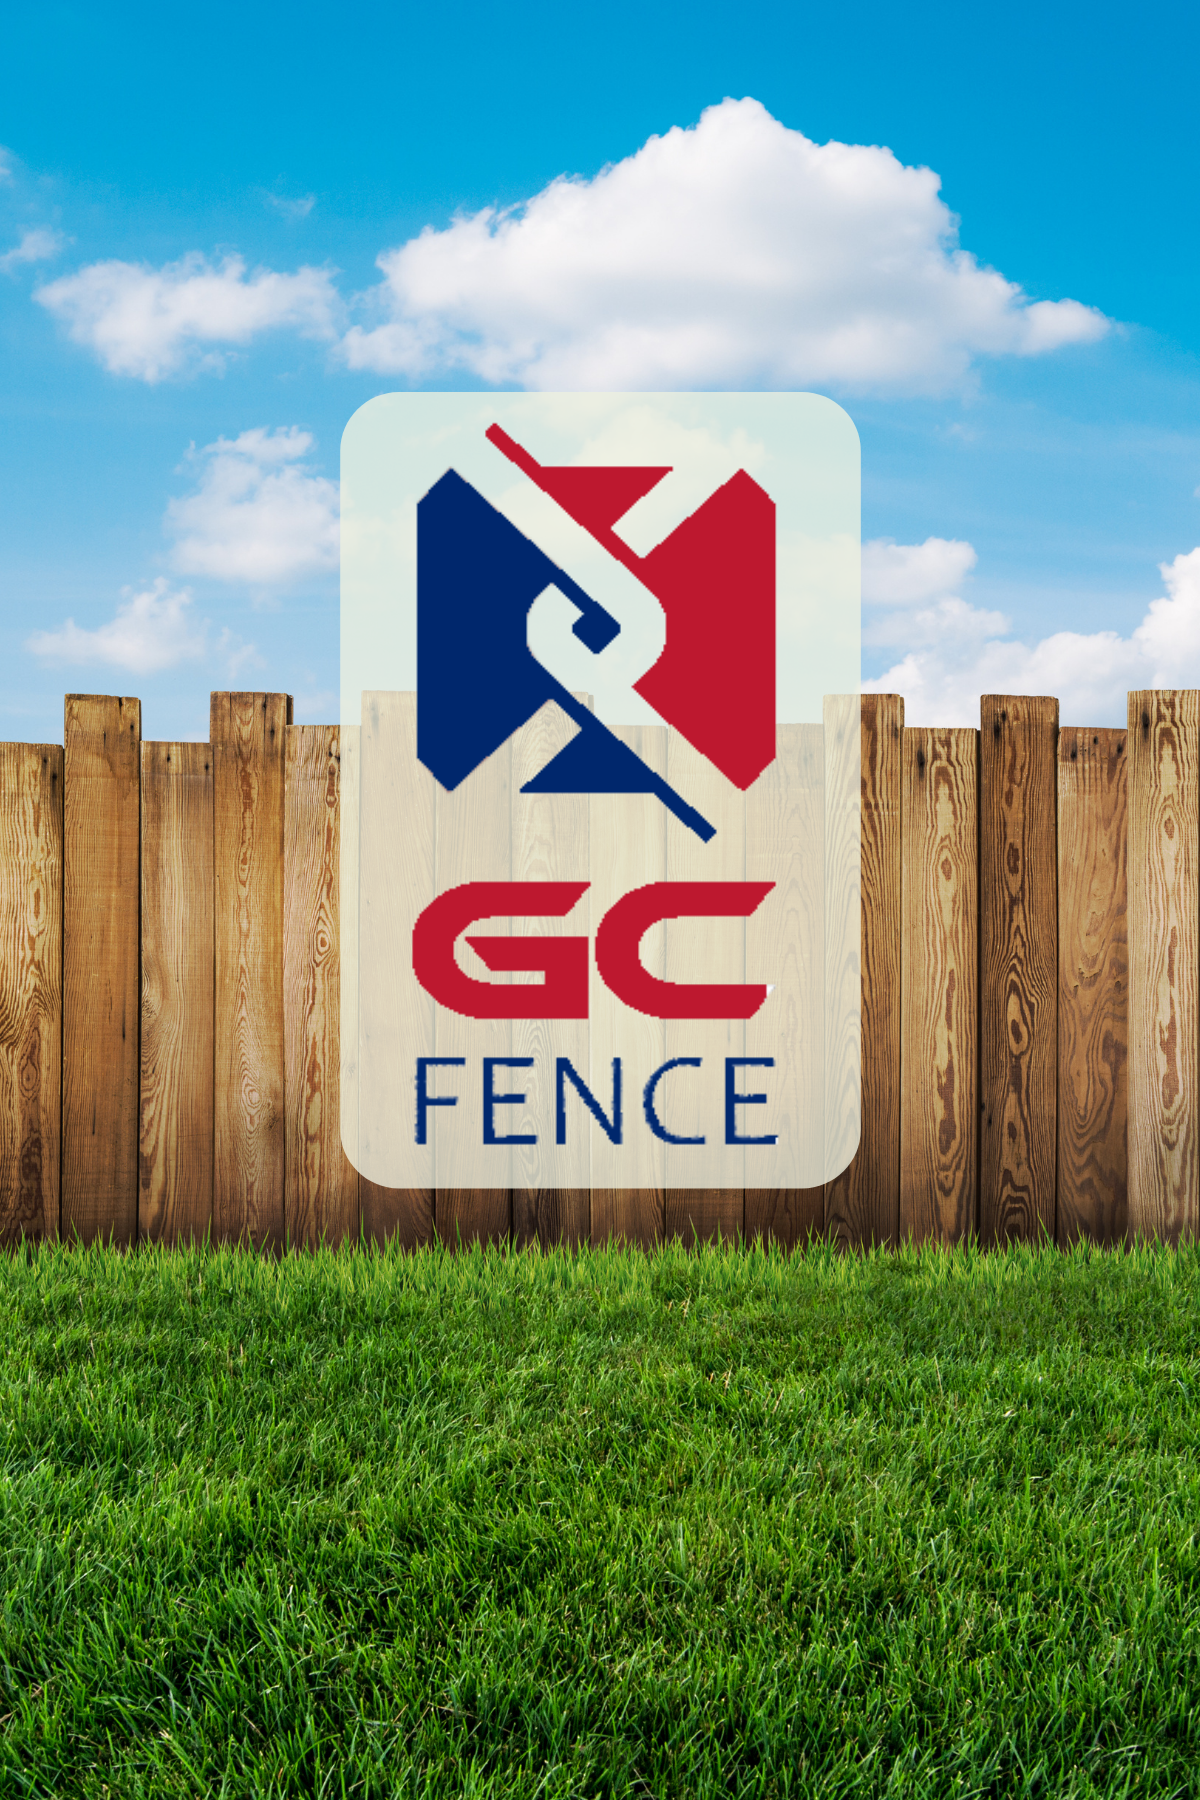 GC Fence